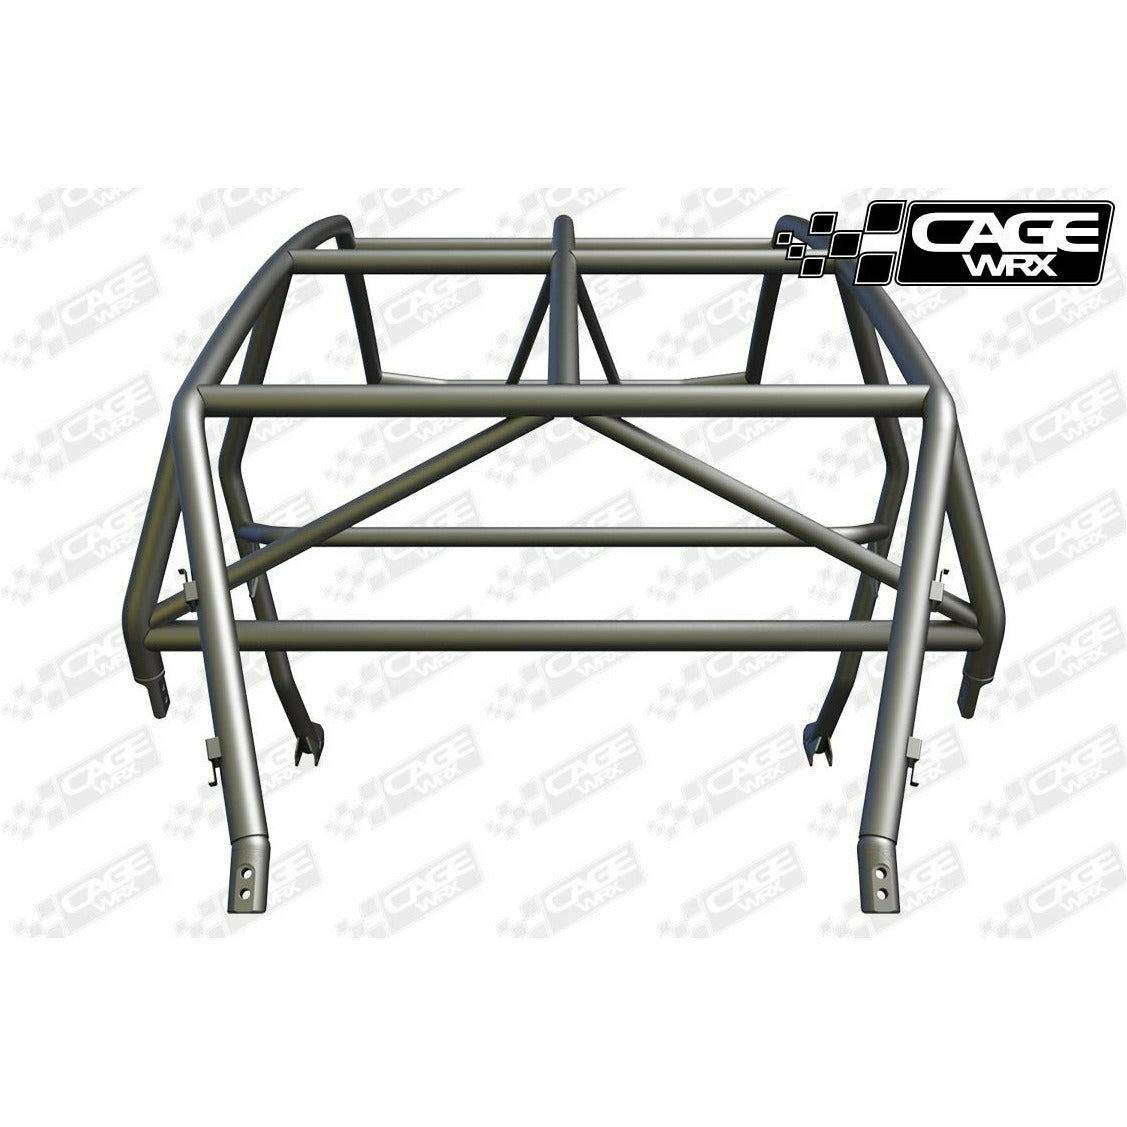 CageWRX Polaris RZR XP 1000/Turbo (2014-2018) "SUPER SHORTY" 4-Door Unassembled Cage Kit (Raw)